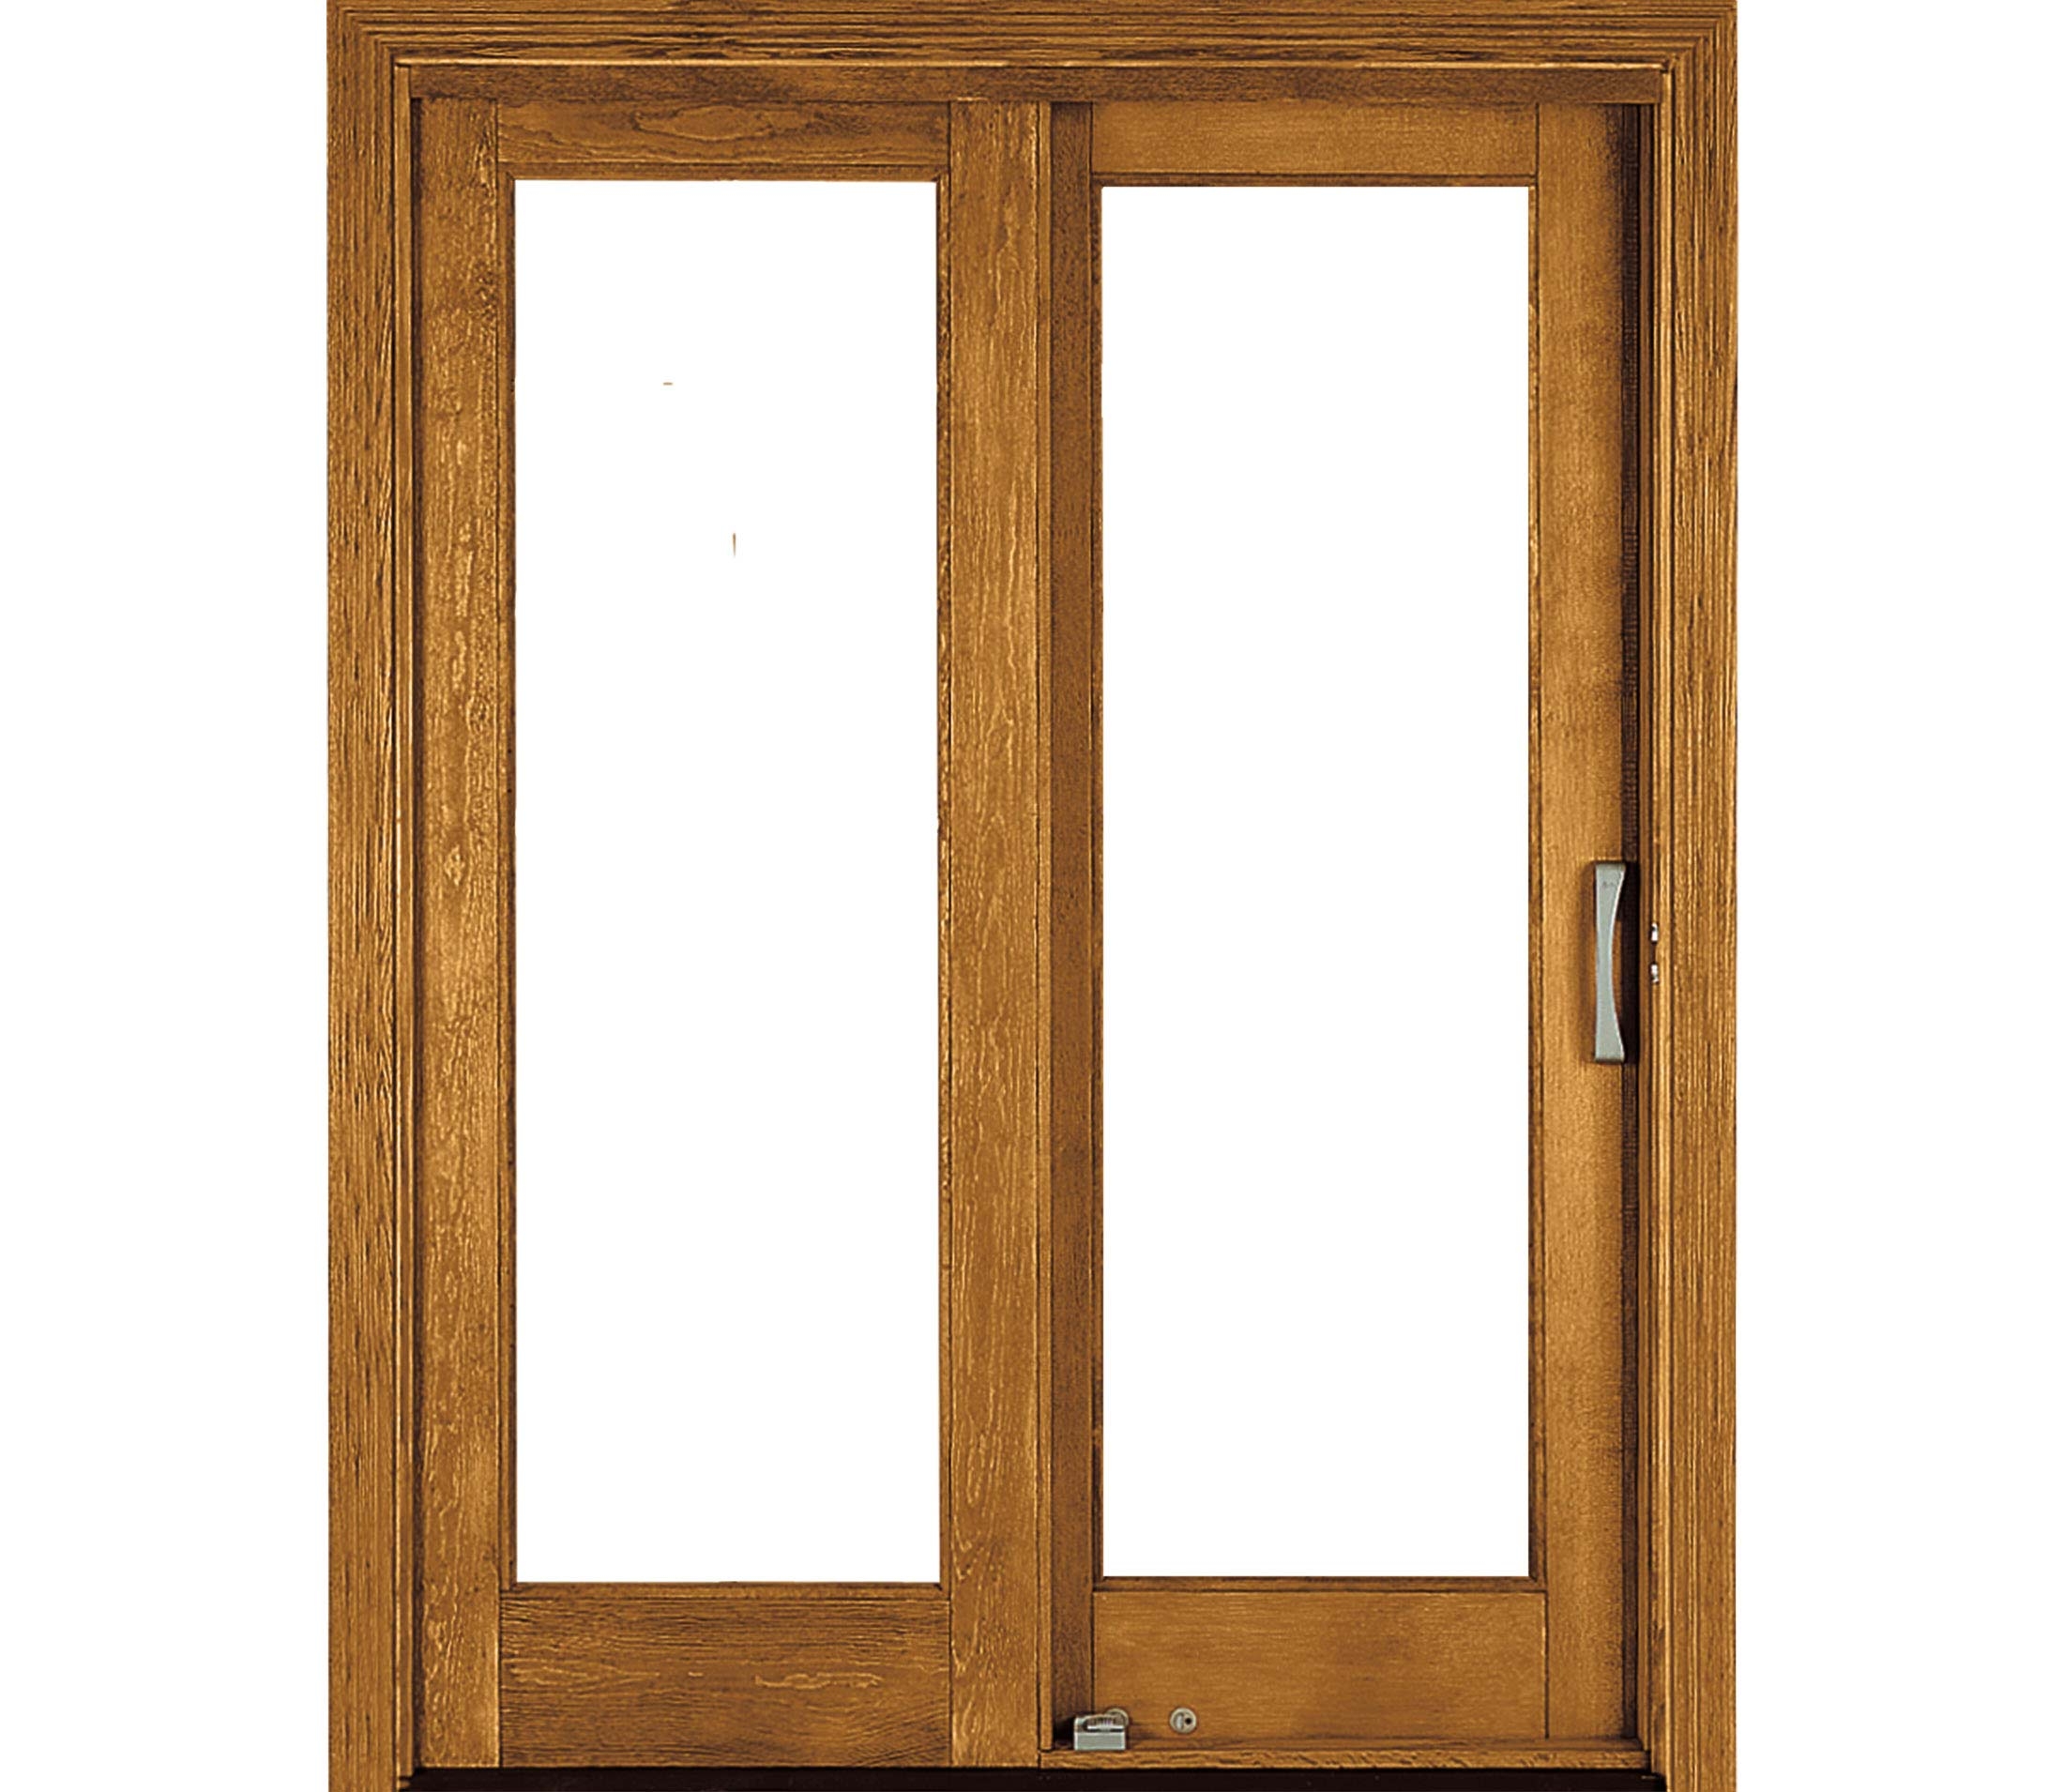 Pella Sliding Glass Door Standard Sizes